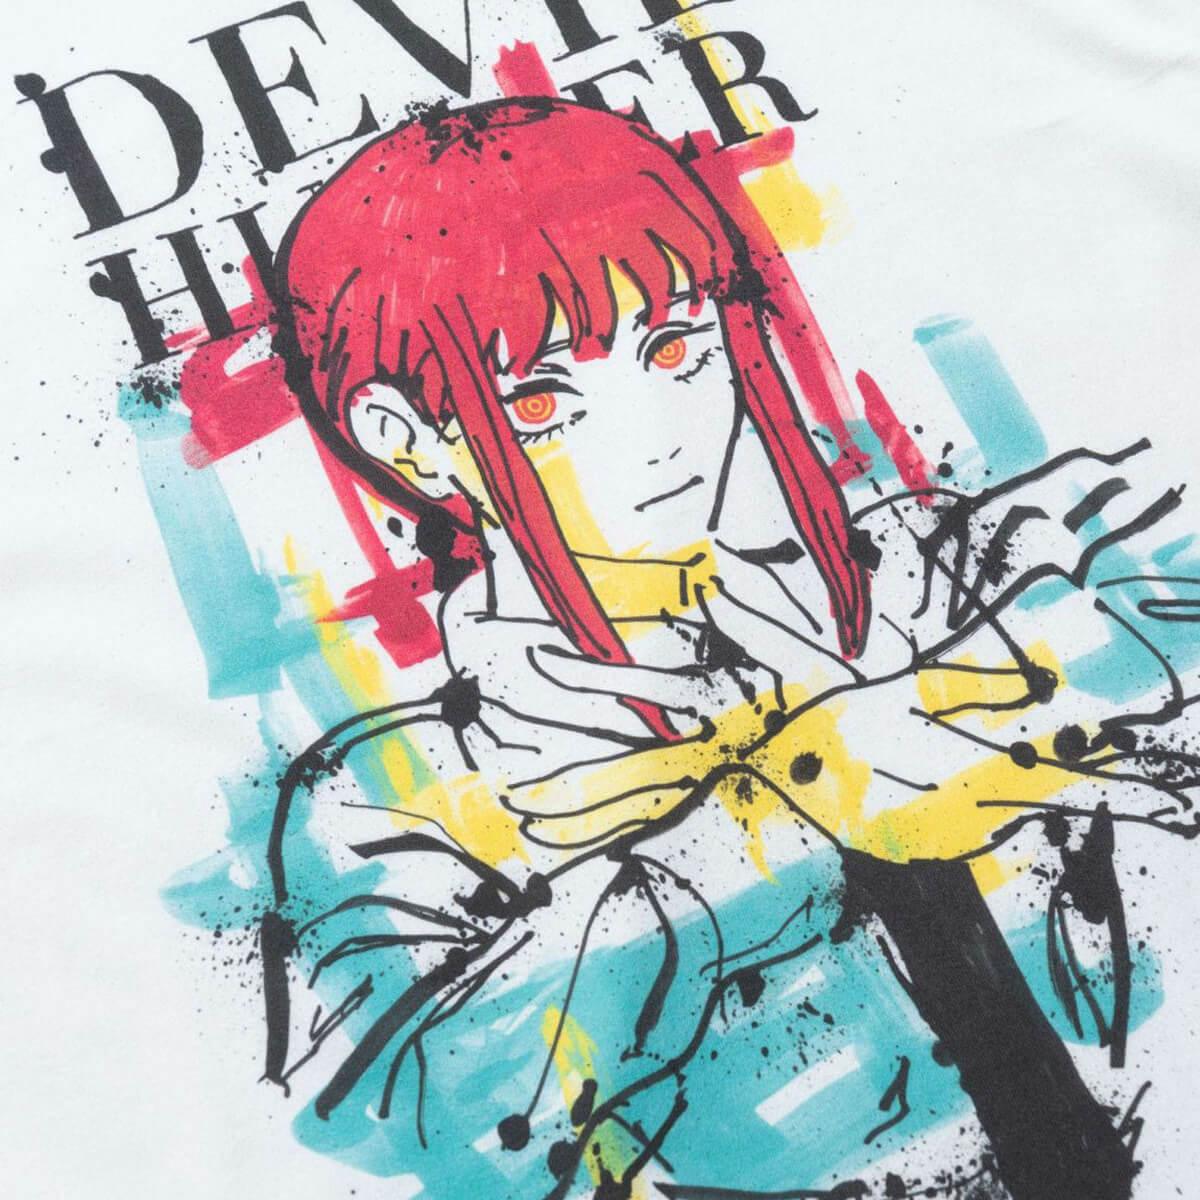 Chainsaw Man Makima Devil Hunter T-Shirt - Aesthetic Clothes Shop